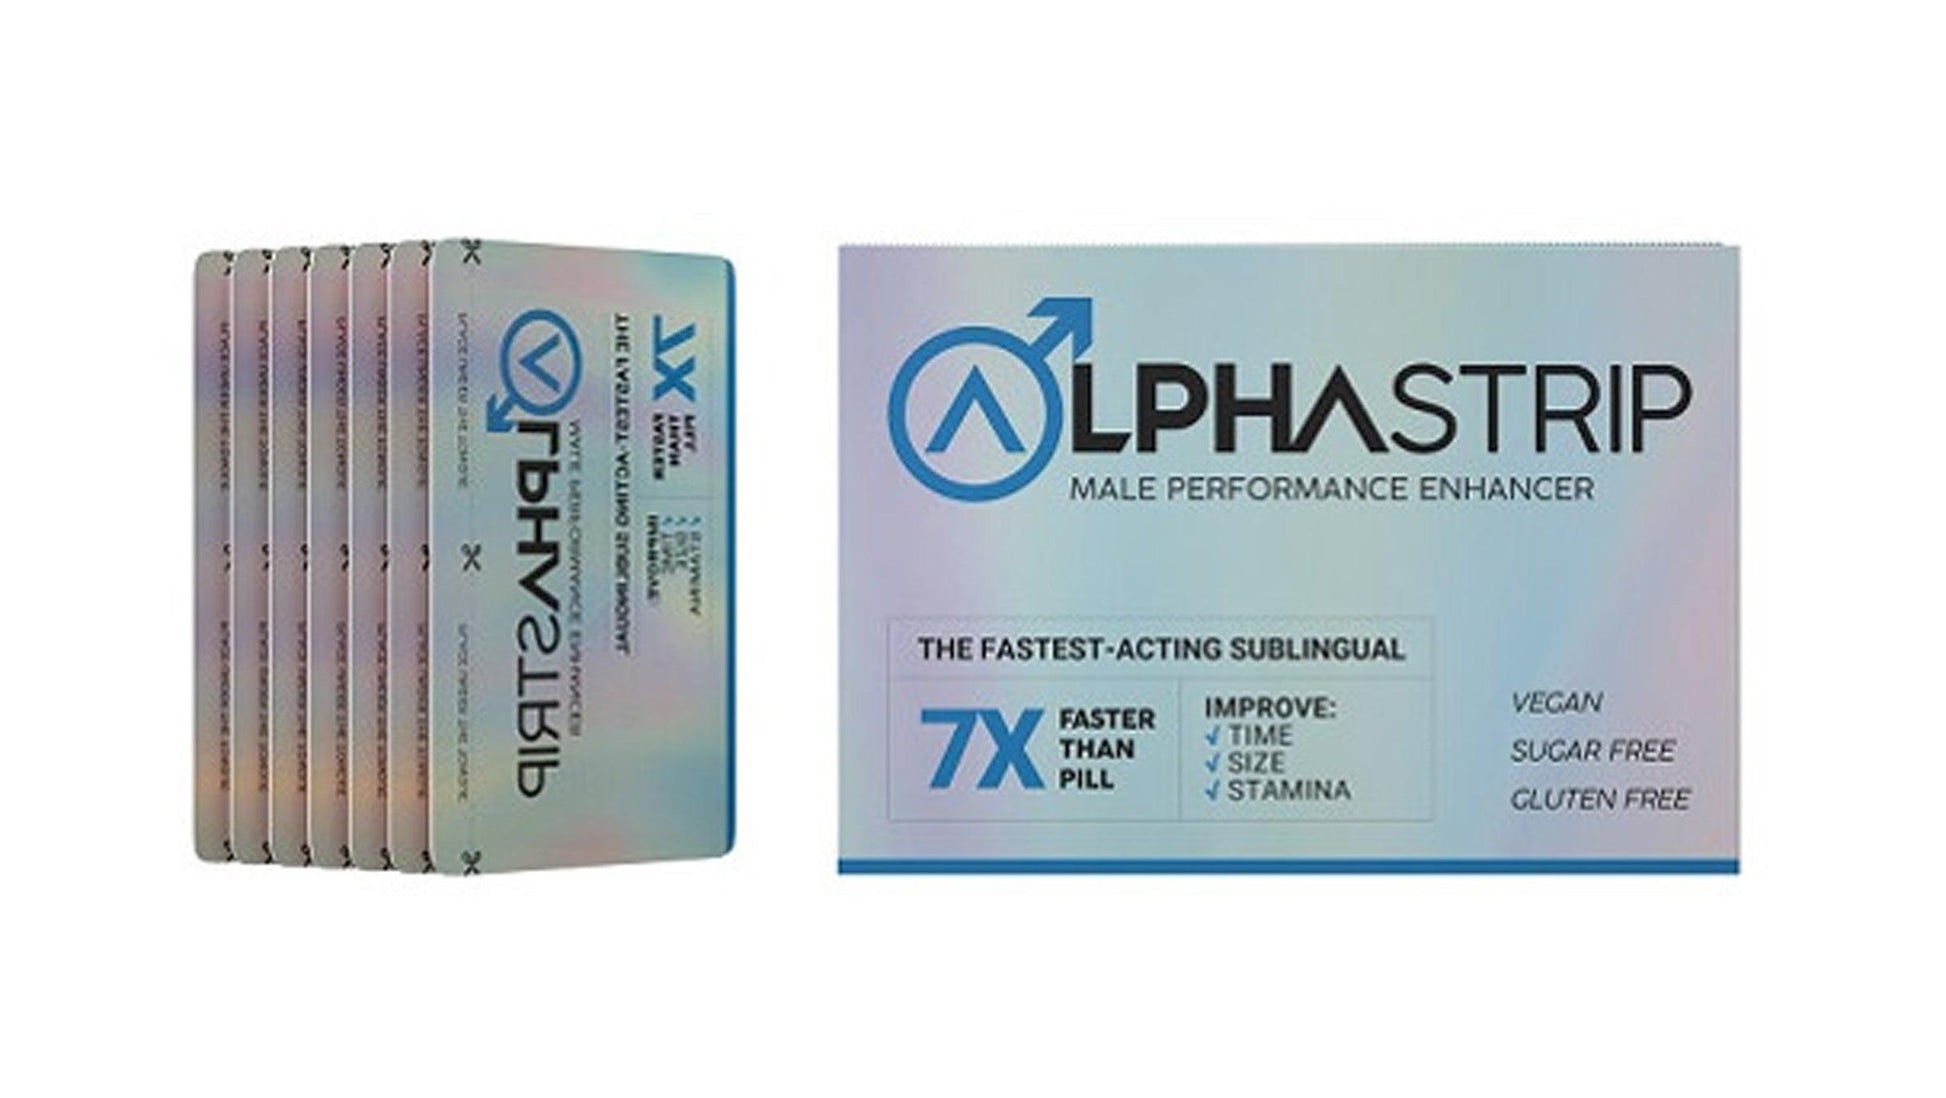 Alphastrip Male Enhancer 36 Ct Display - My Sex Toy Hub